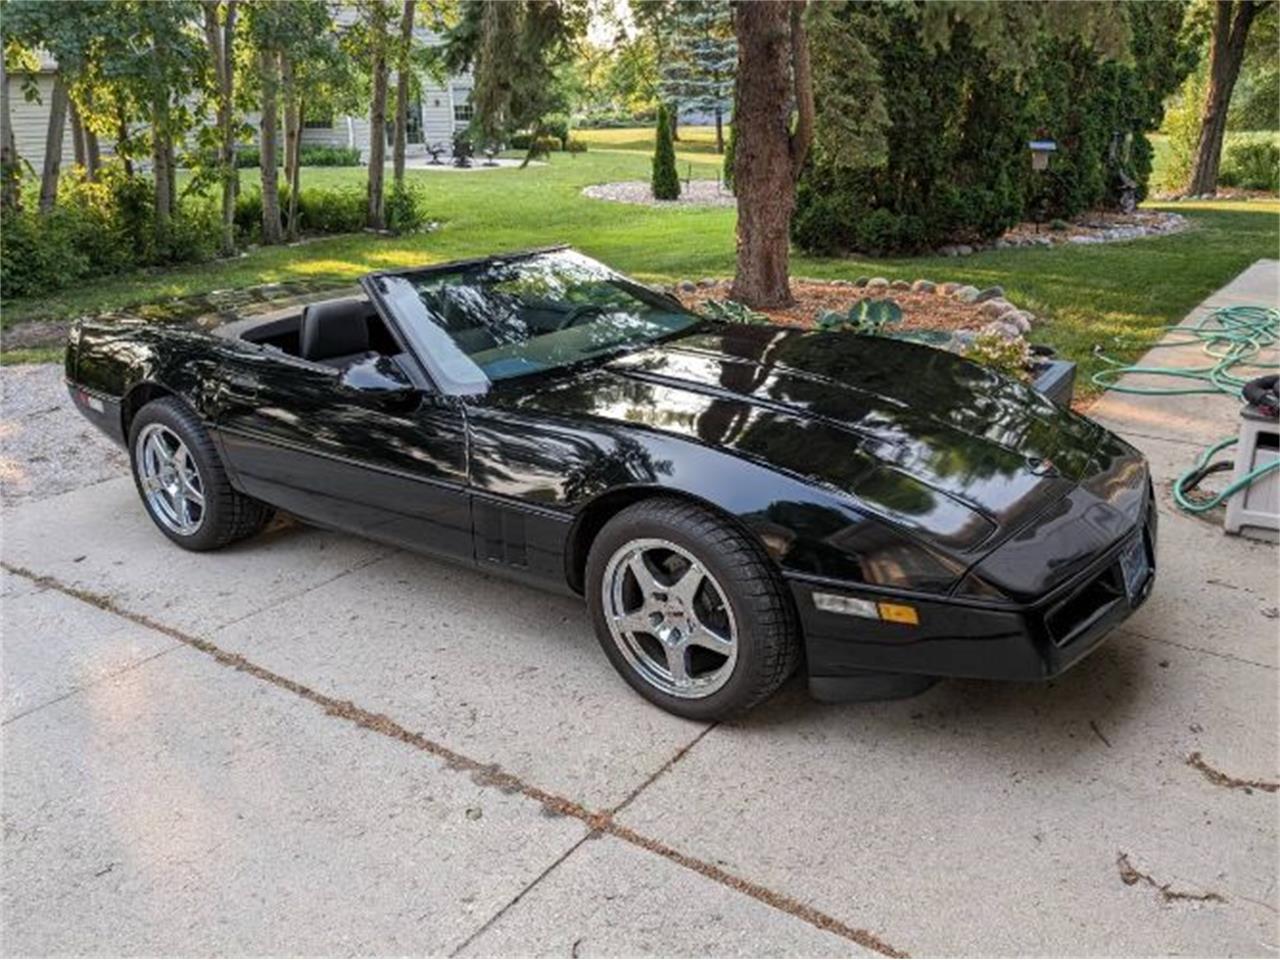 For Sale: 1987 Chevrolet Corvette in Cadillac, Michigan for sale in Cadillac, MI